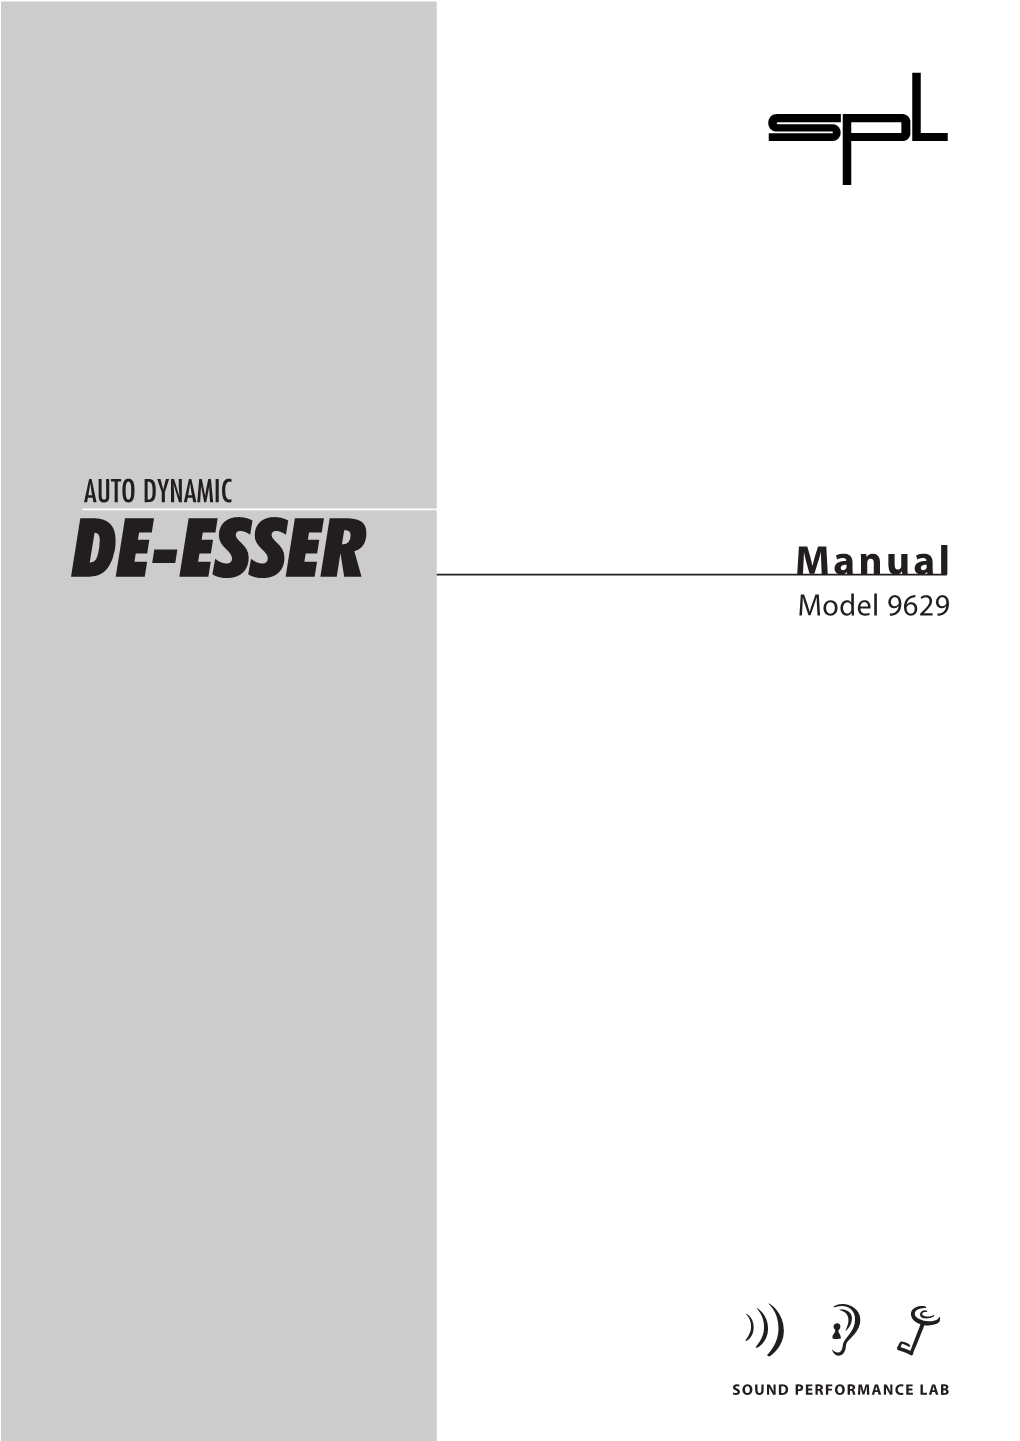 DE-ESSER Manual Model 9629